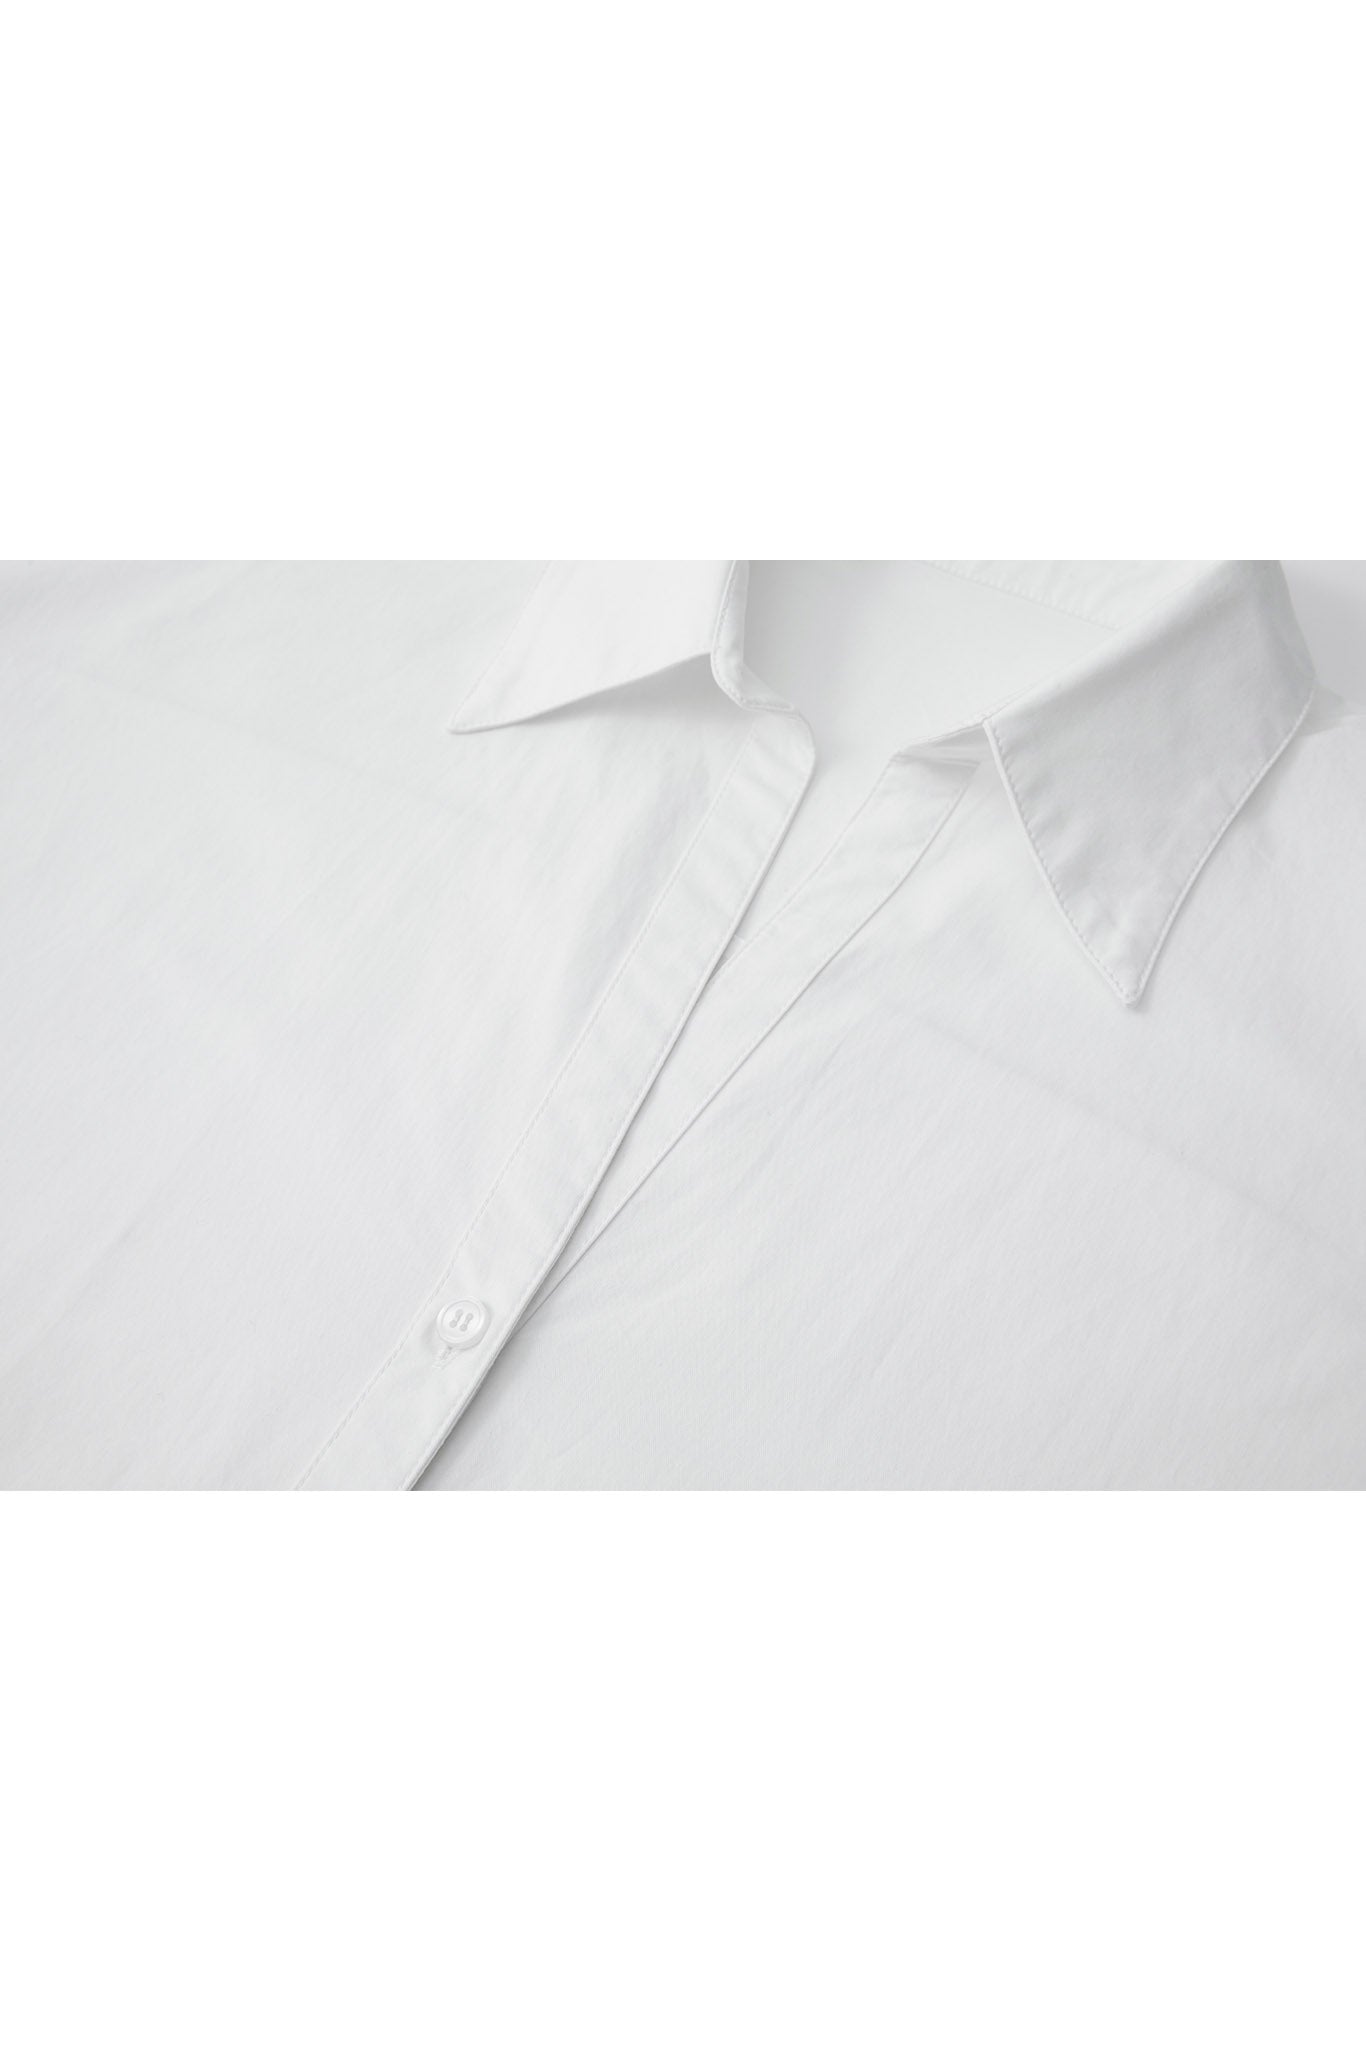 [tageechita] Drop shoulder basic shirt